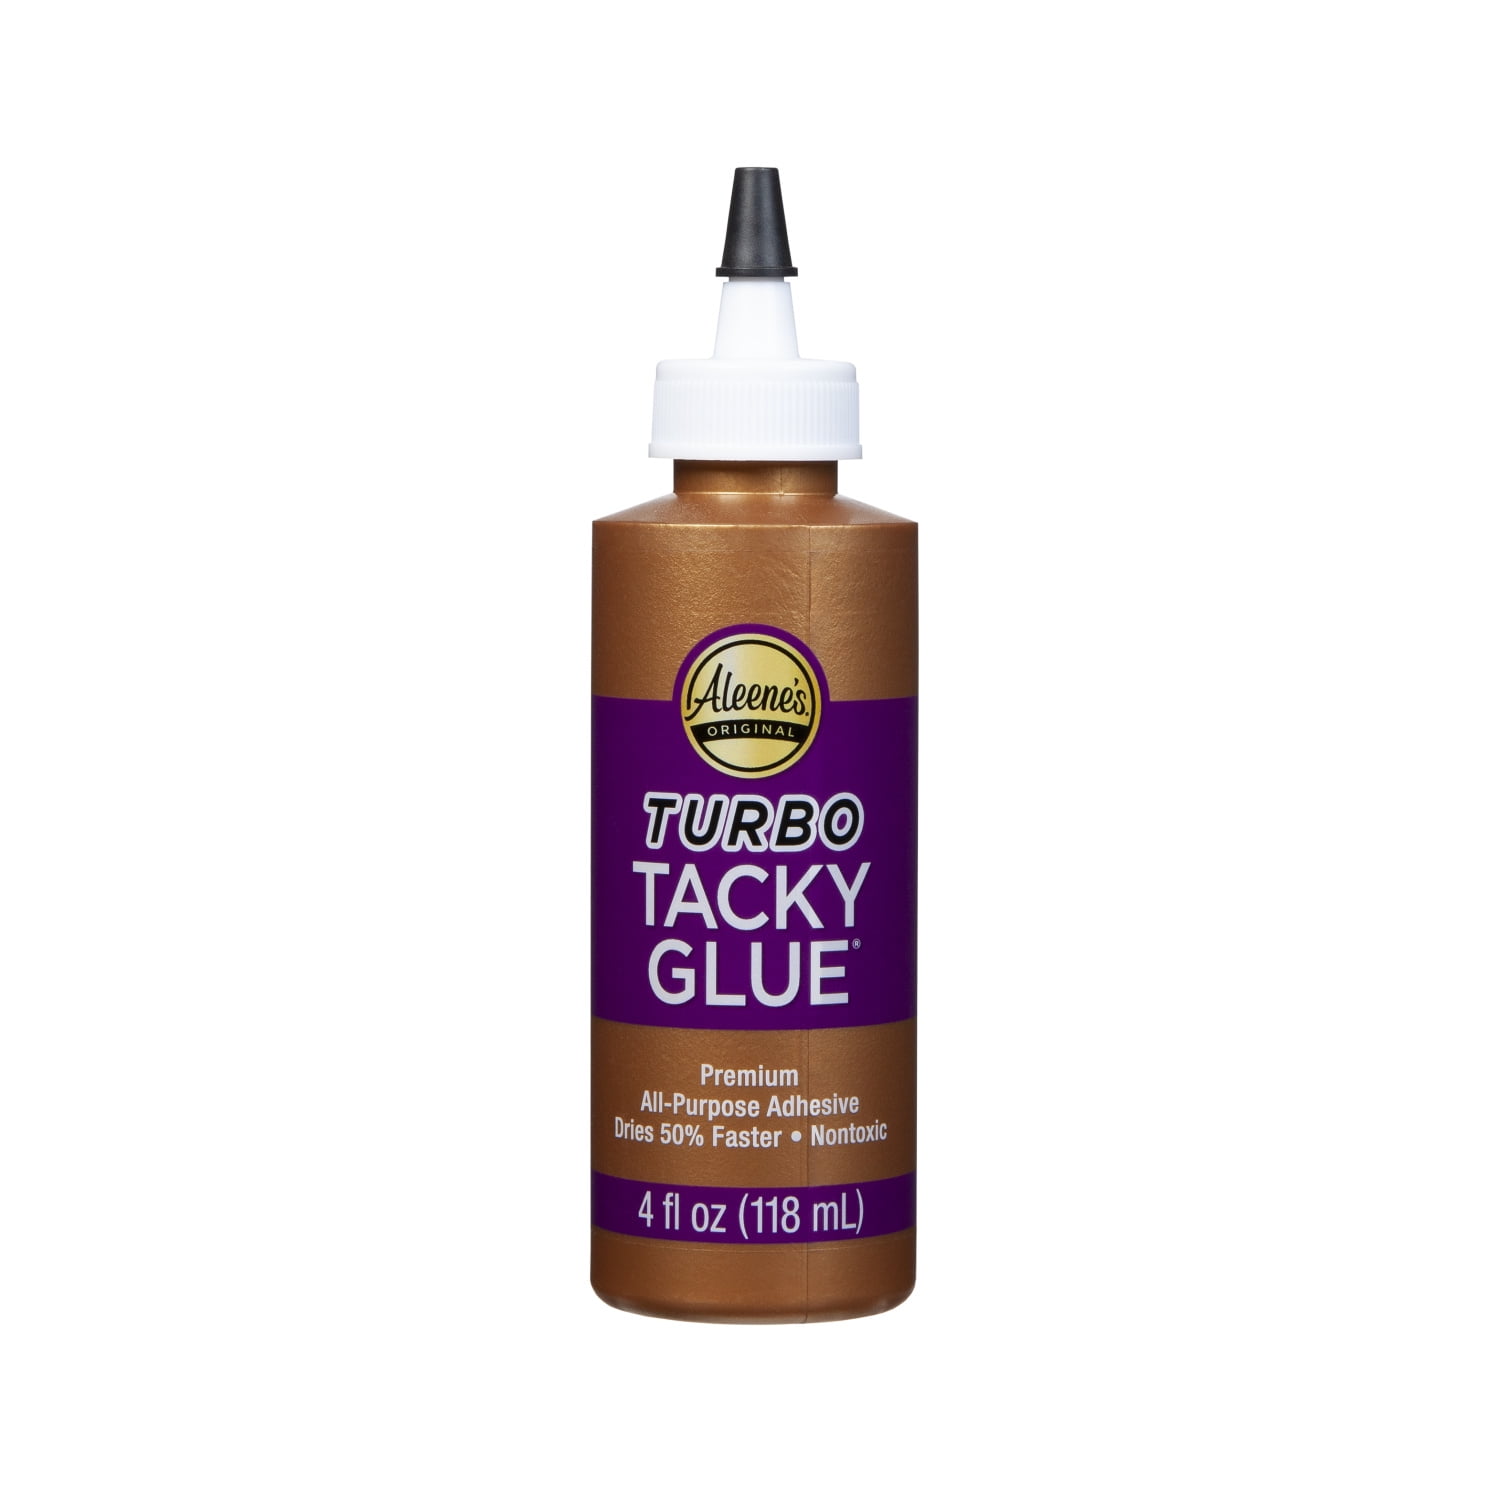 Aleene's Turbo Tacky White Glue 4 fl oz, Dries Fast, Premium All-Purpose Adhesive, Dries Clear